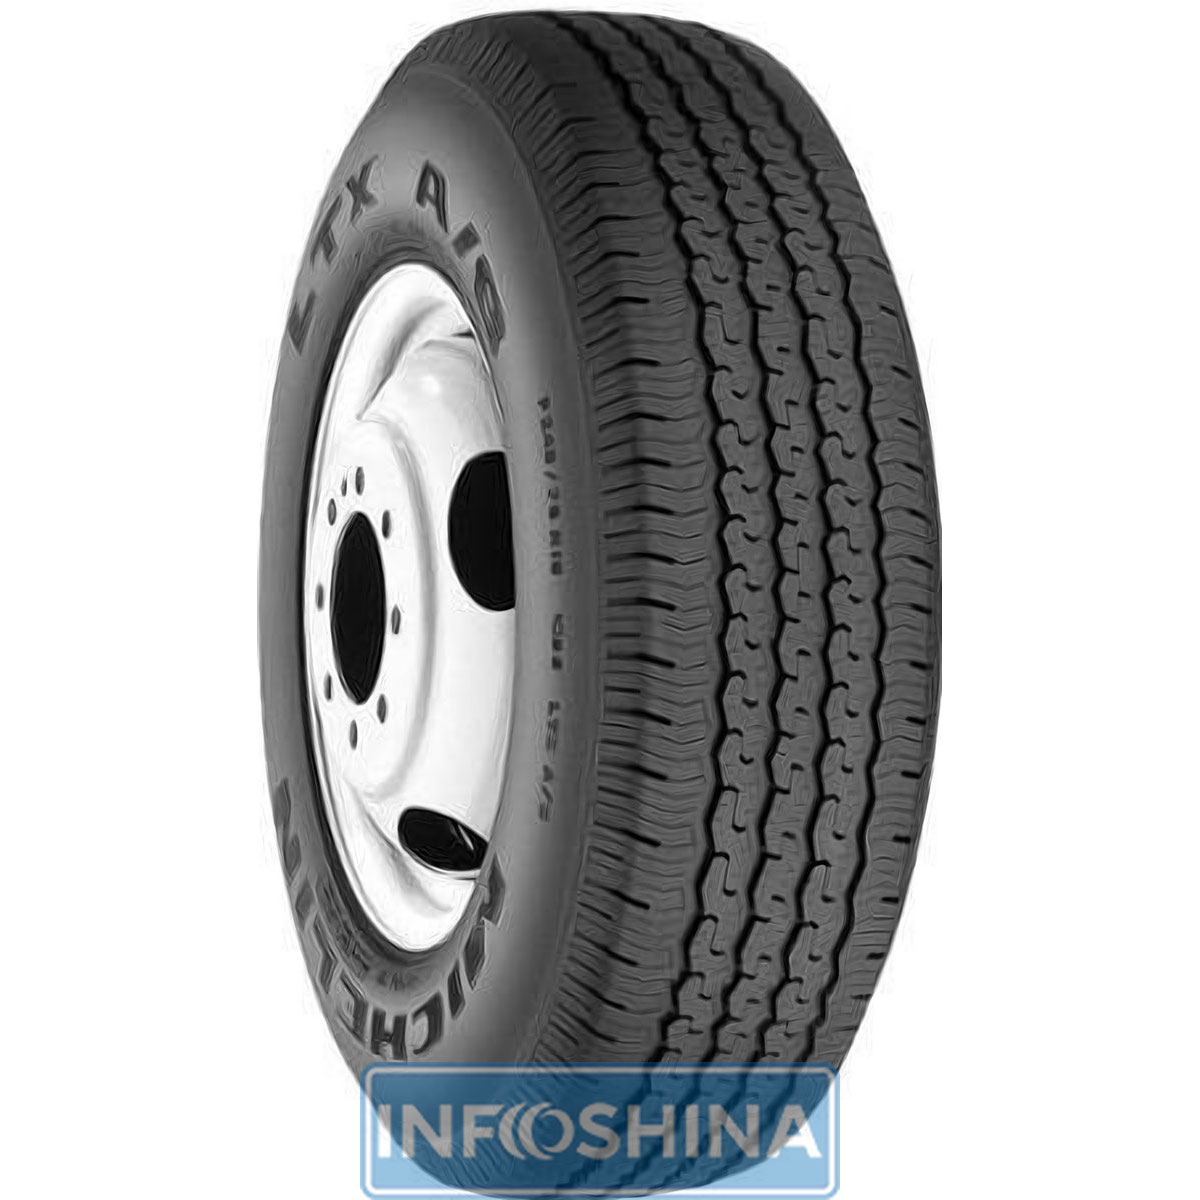 Купити шини Michelin LTX A/S 255/65 R17 108H